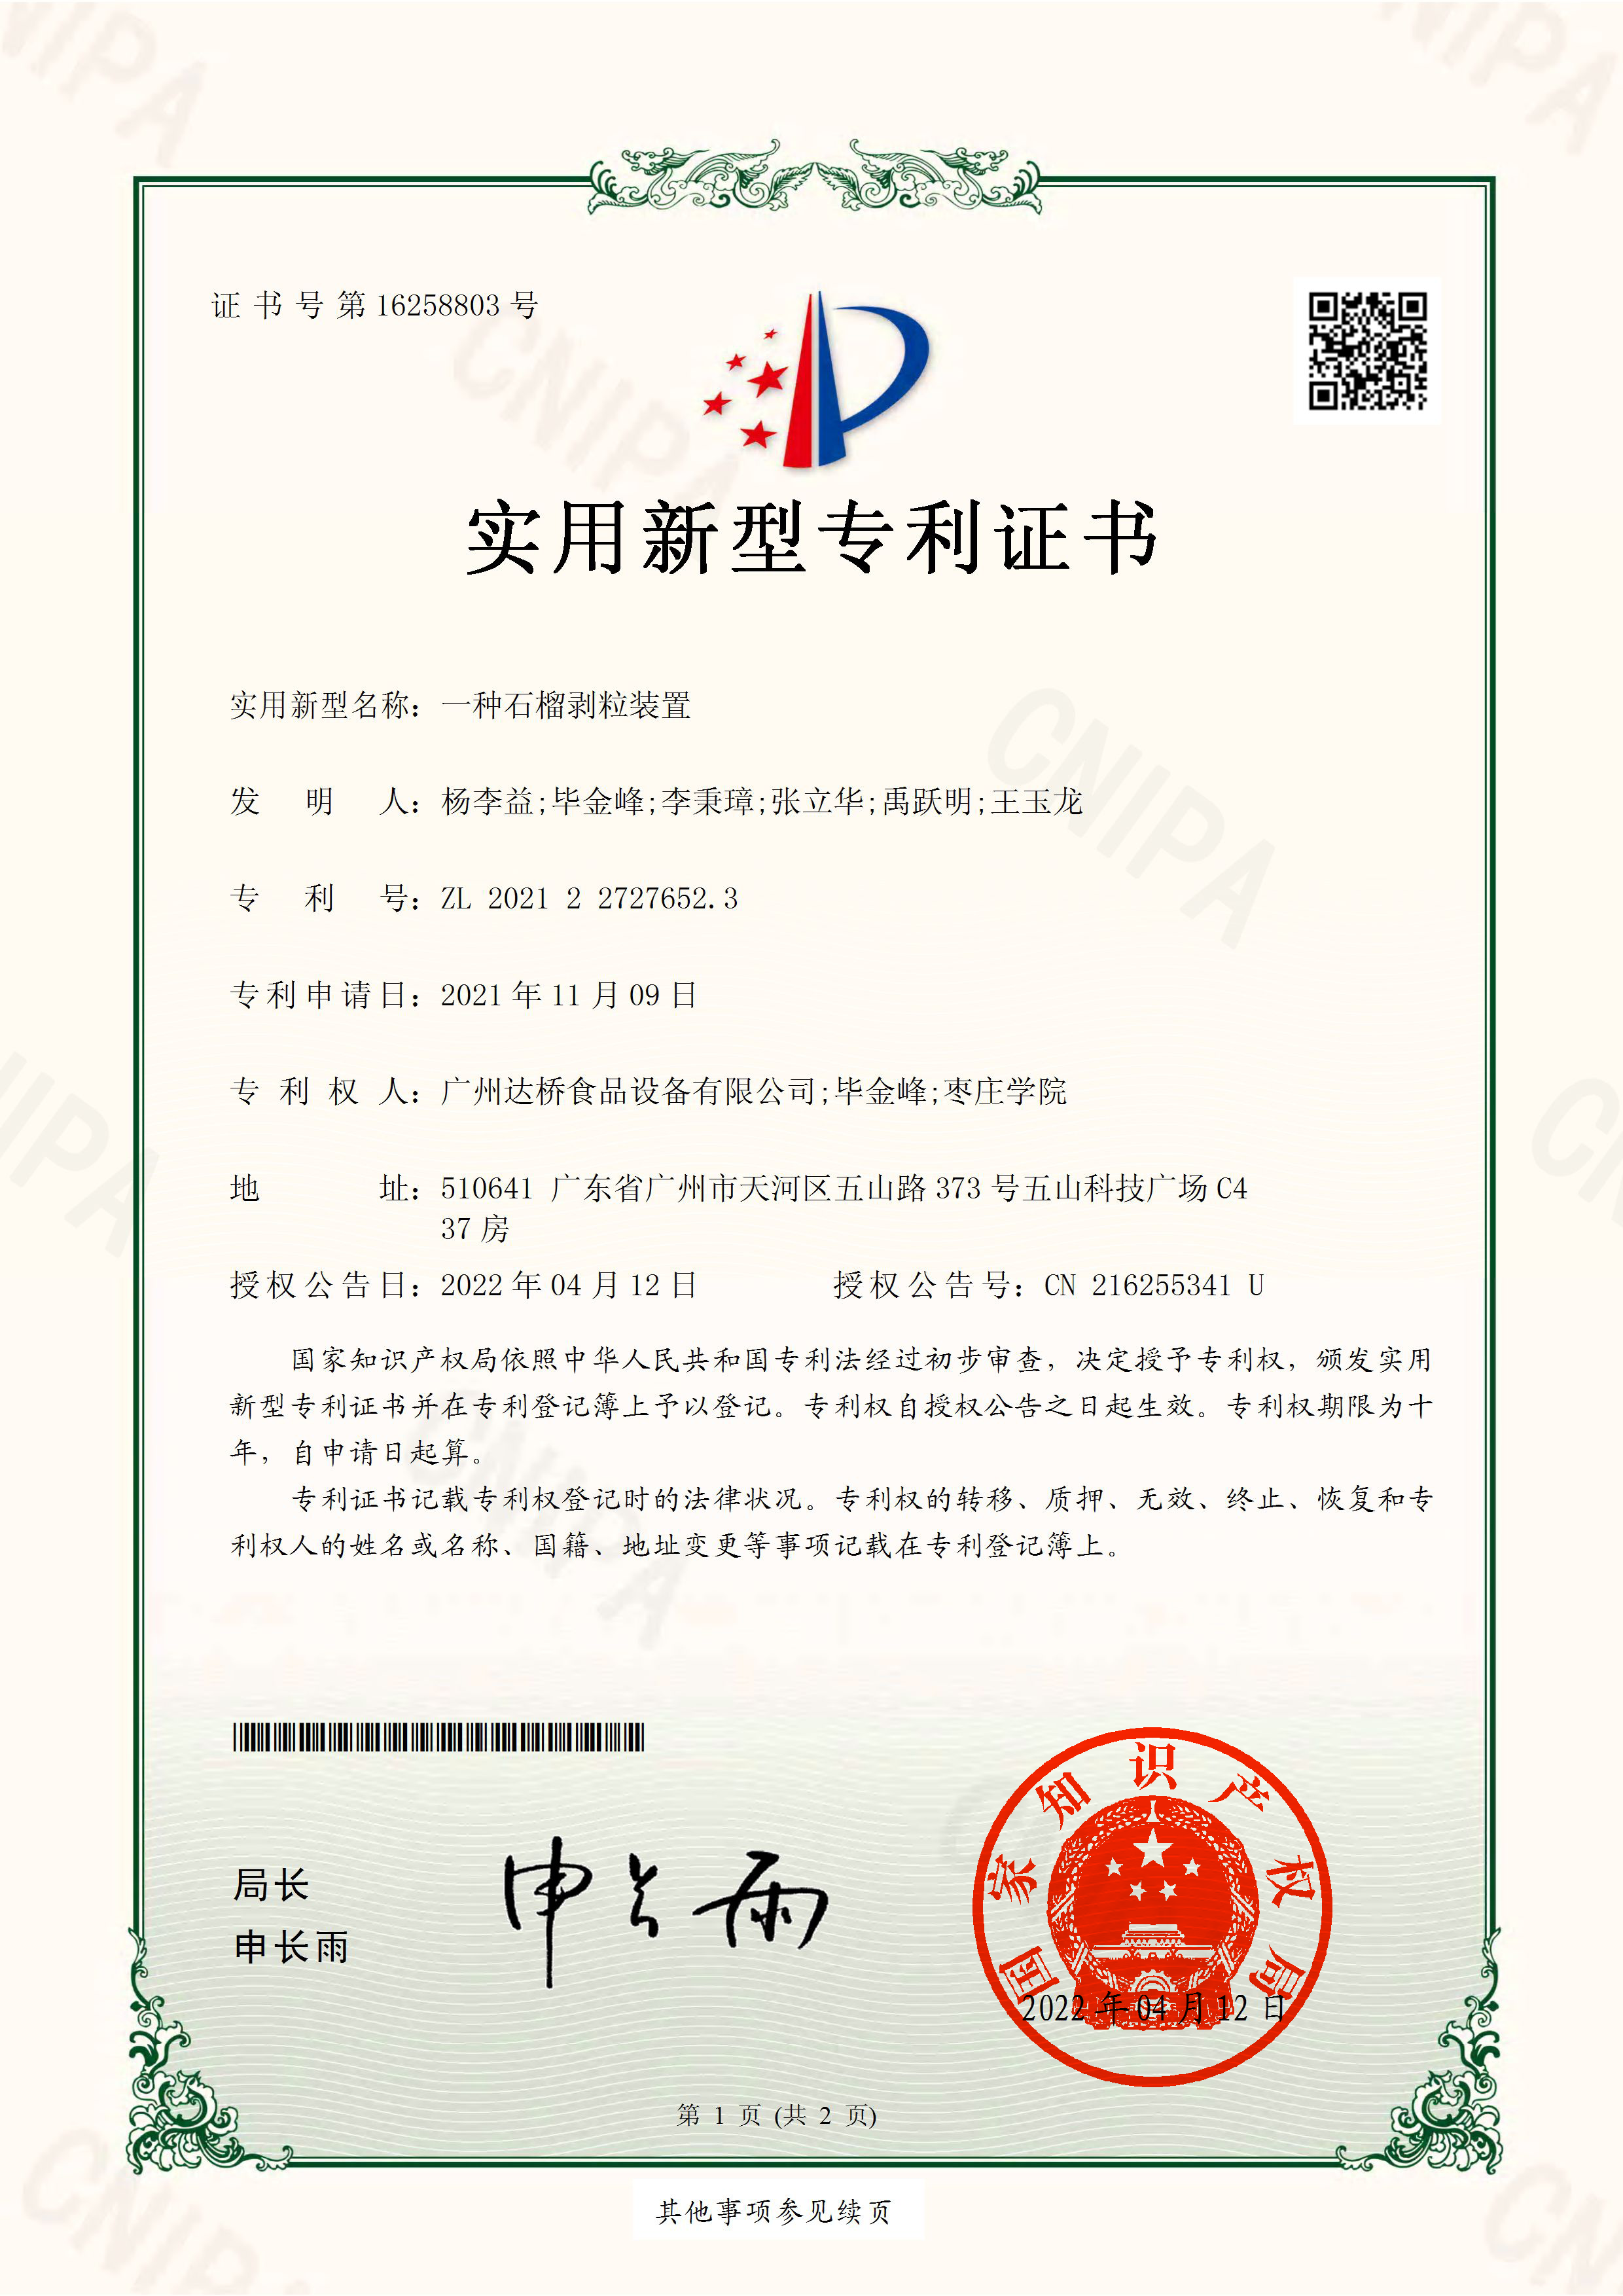 https://gzdaqiao.com/upload/杨李益专利之60——一种石榴剥粒装置